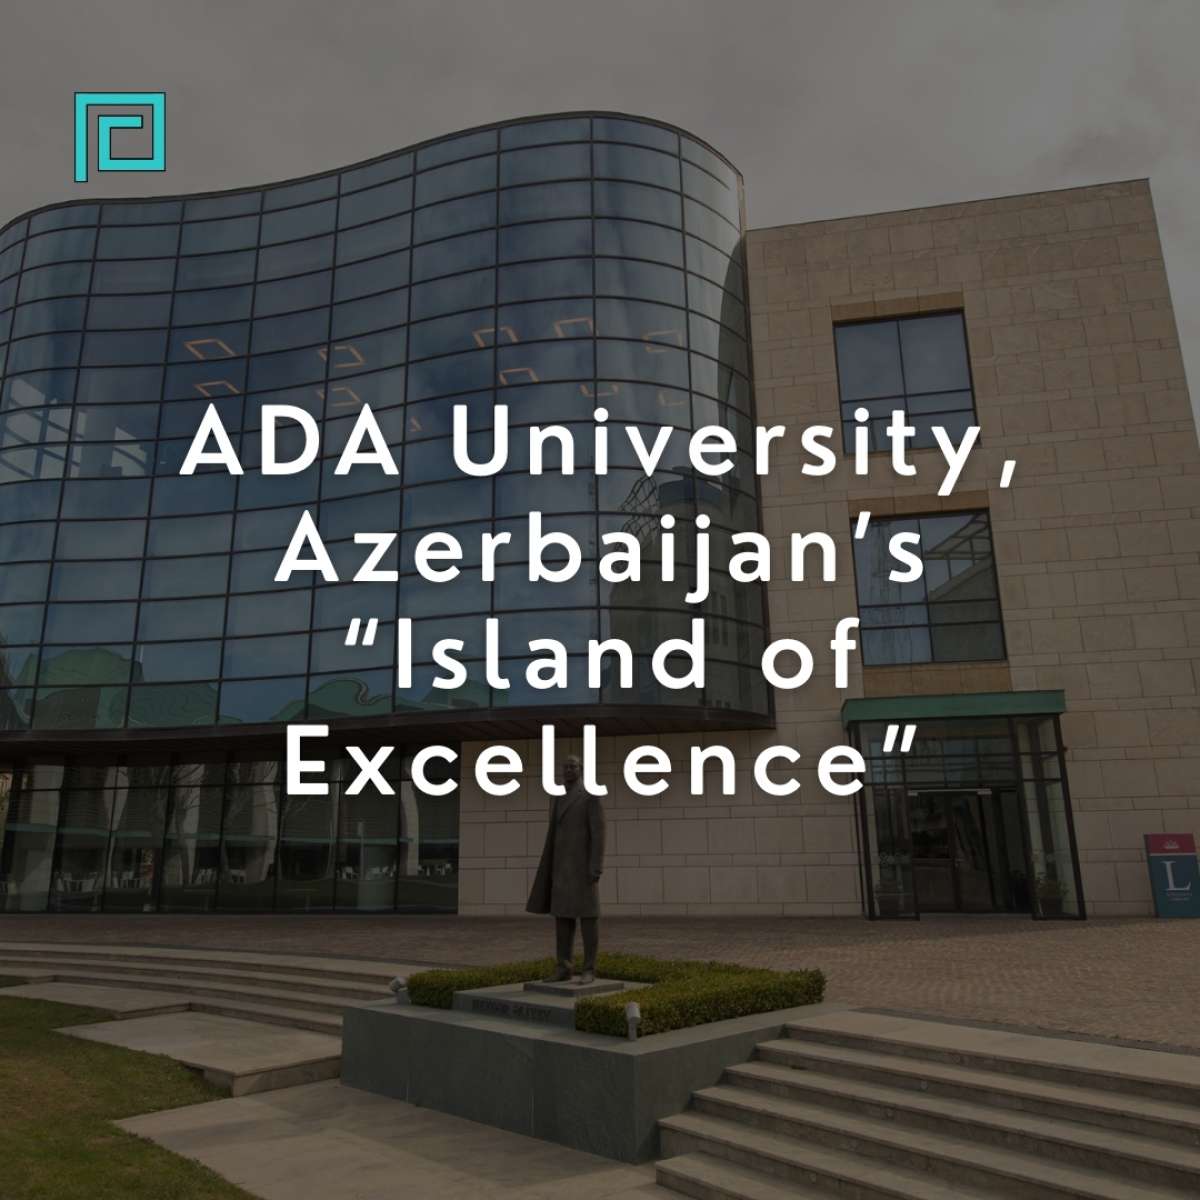 ADA University, Azerbaijan’s “Island of Excellence”